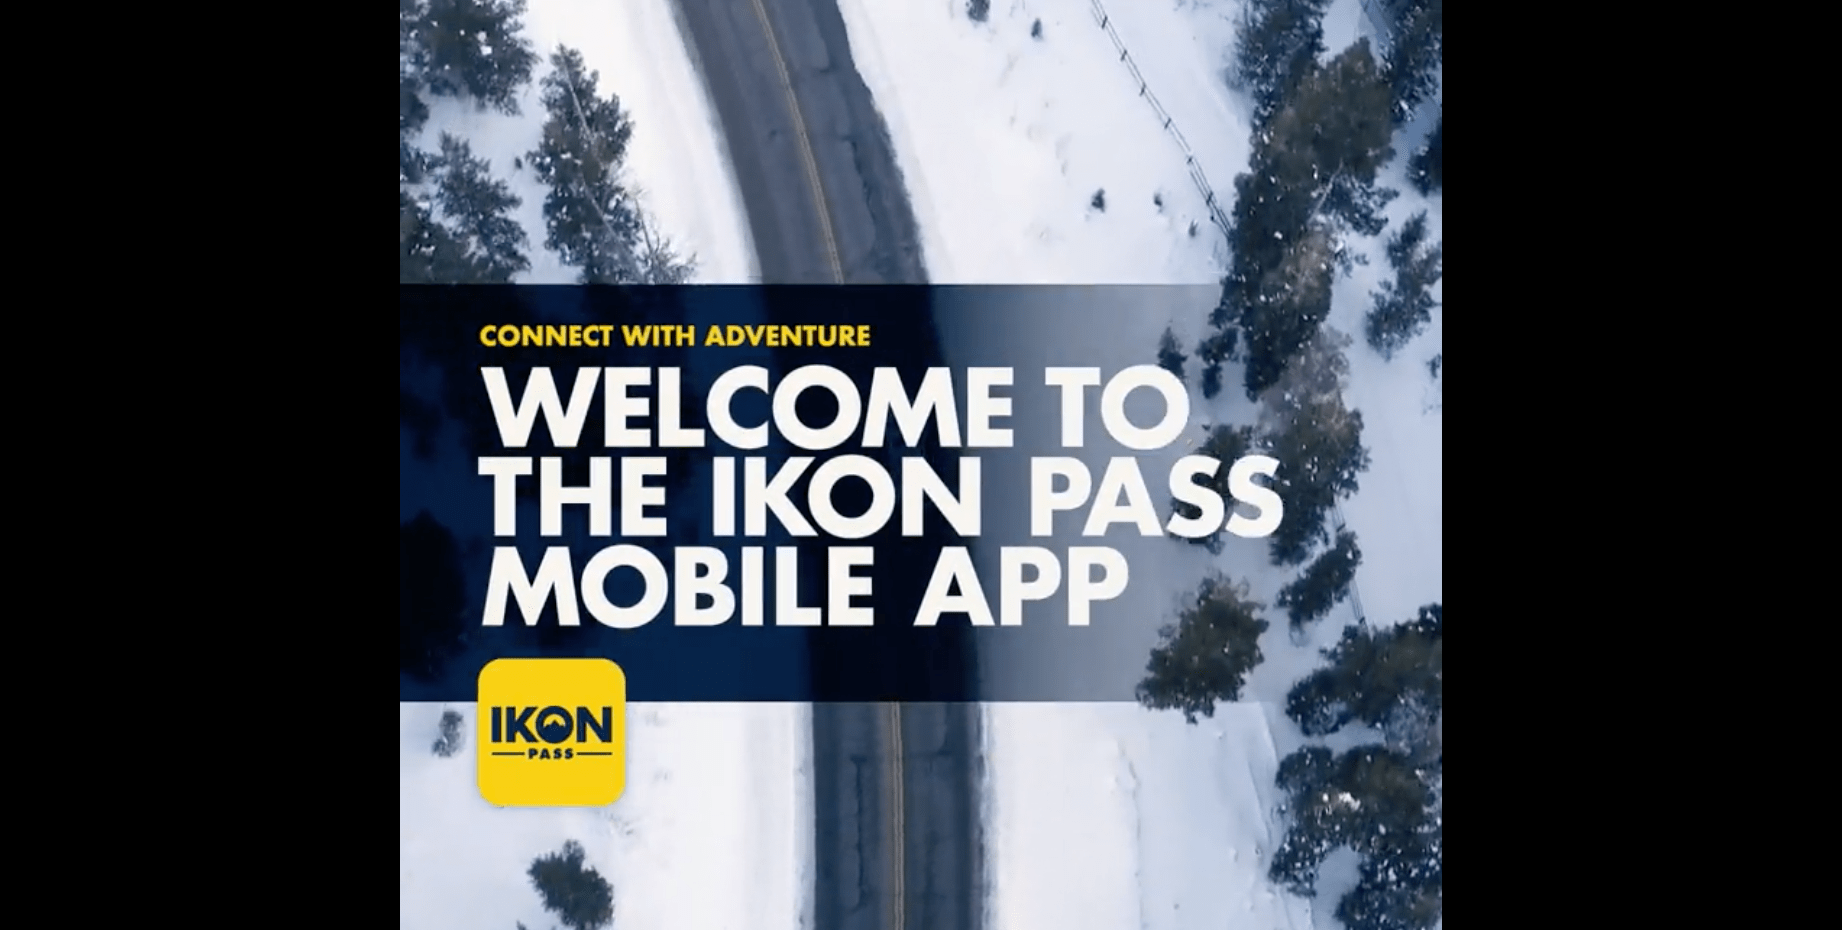 Ikon Pass Ski Tracking App